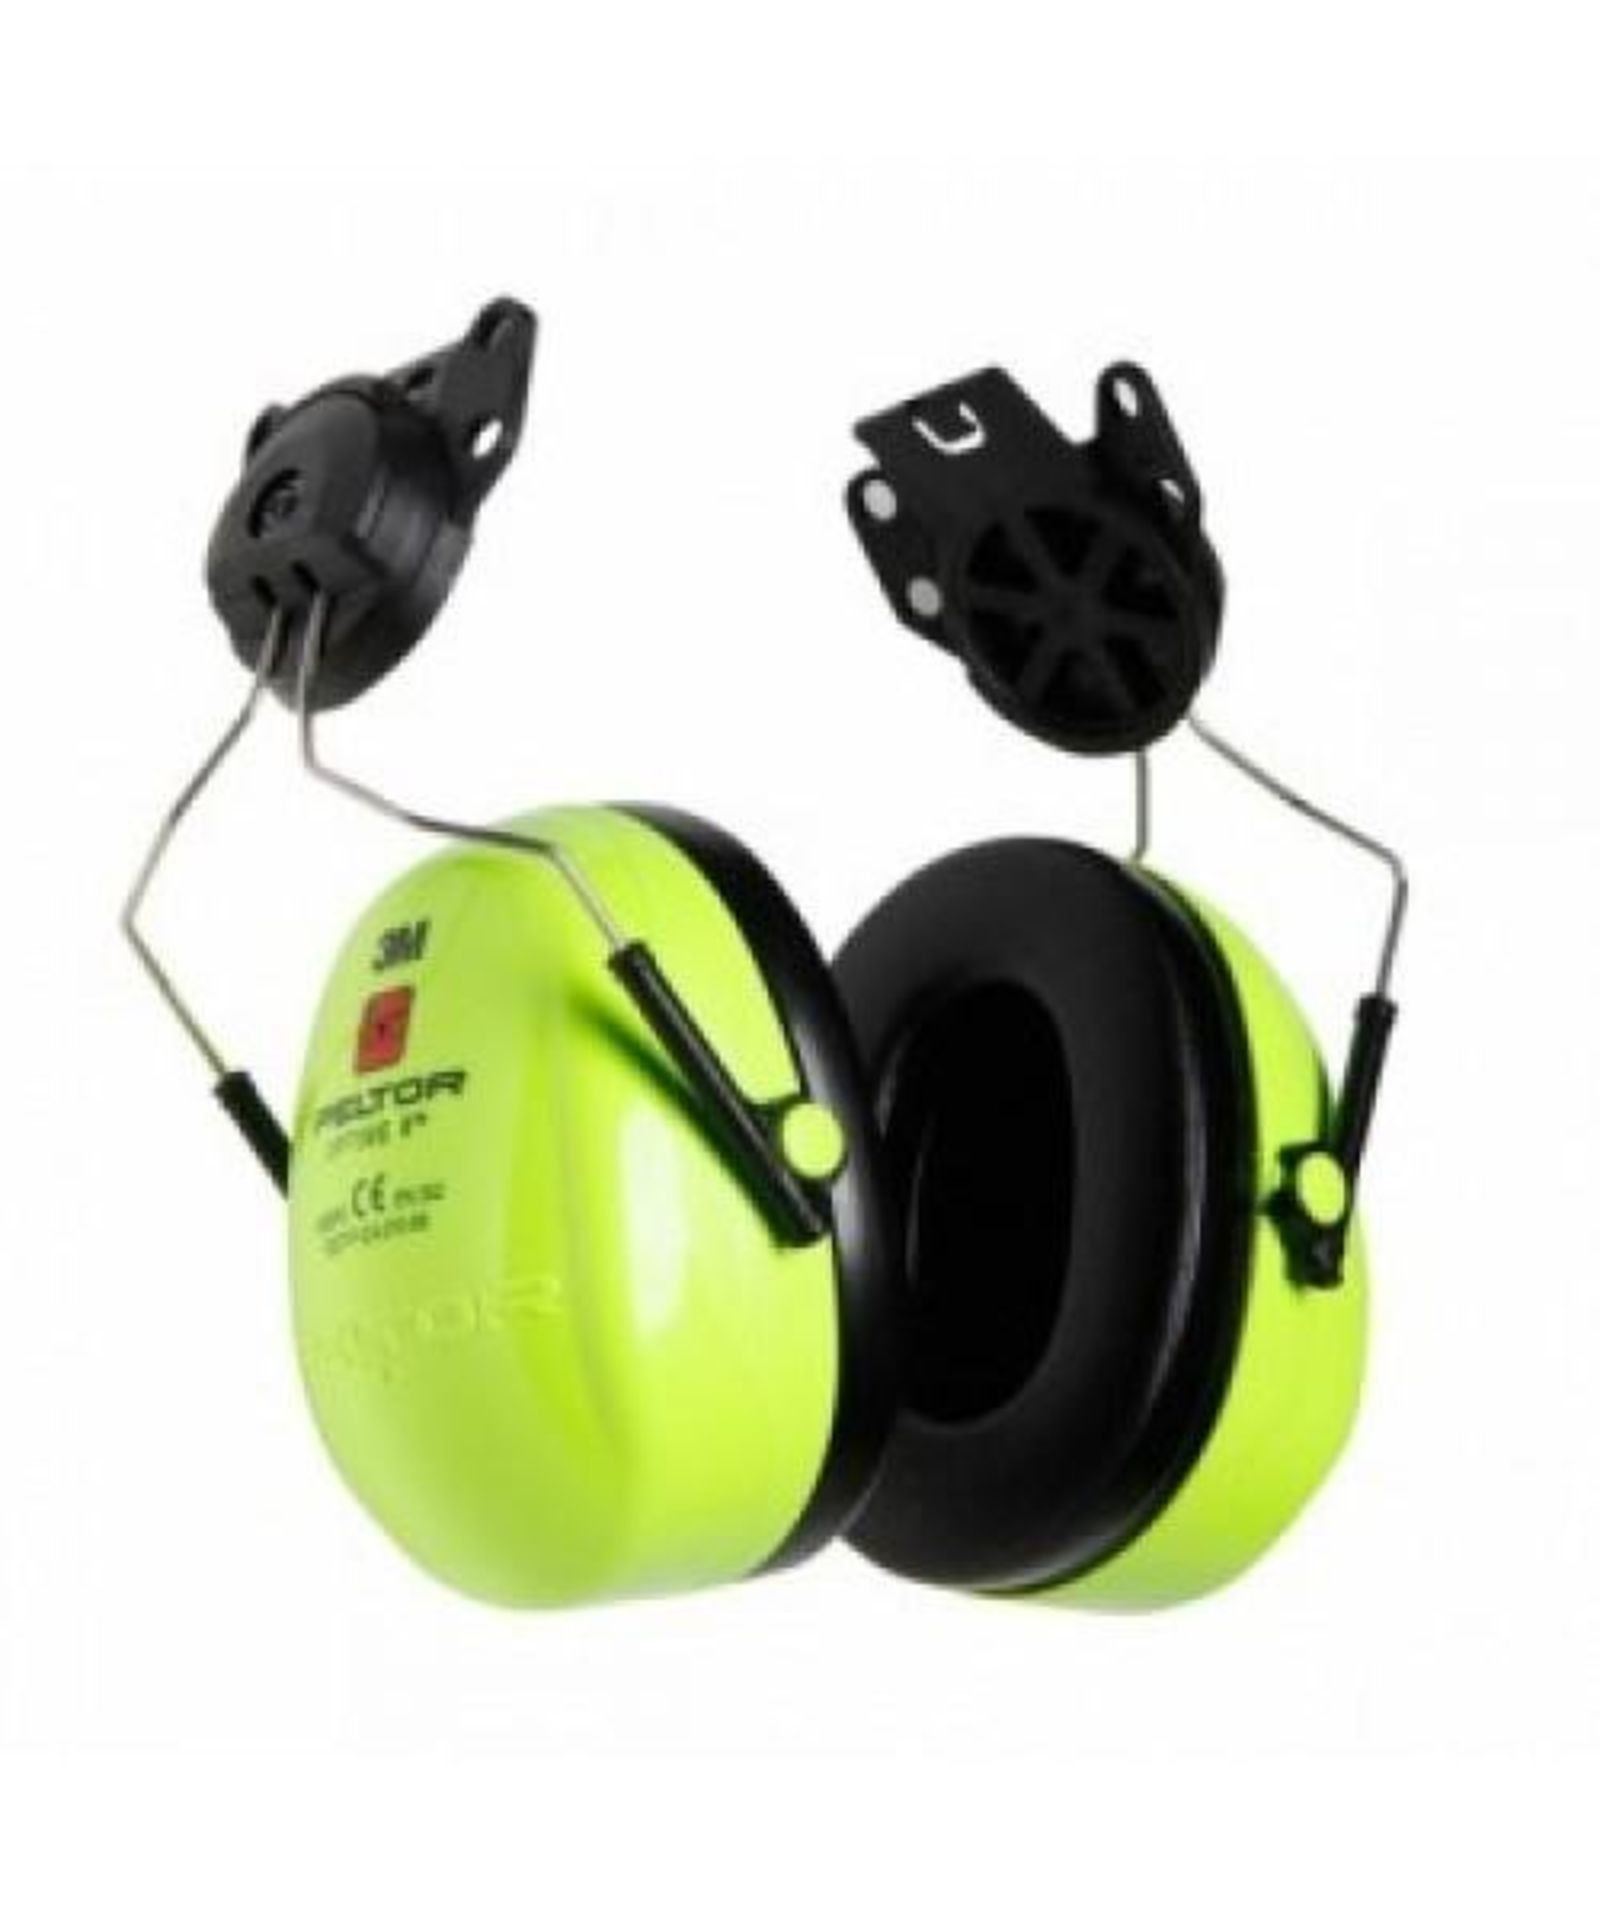 5 x 3M Optime II Ear Muffs Helmet Attach Hi-Viz - CL185 - Ref: 77363/P30 - New Stock - Location: